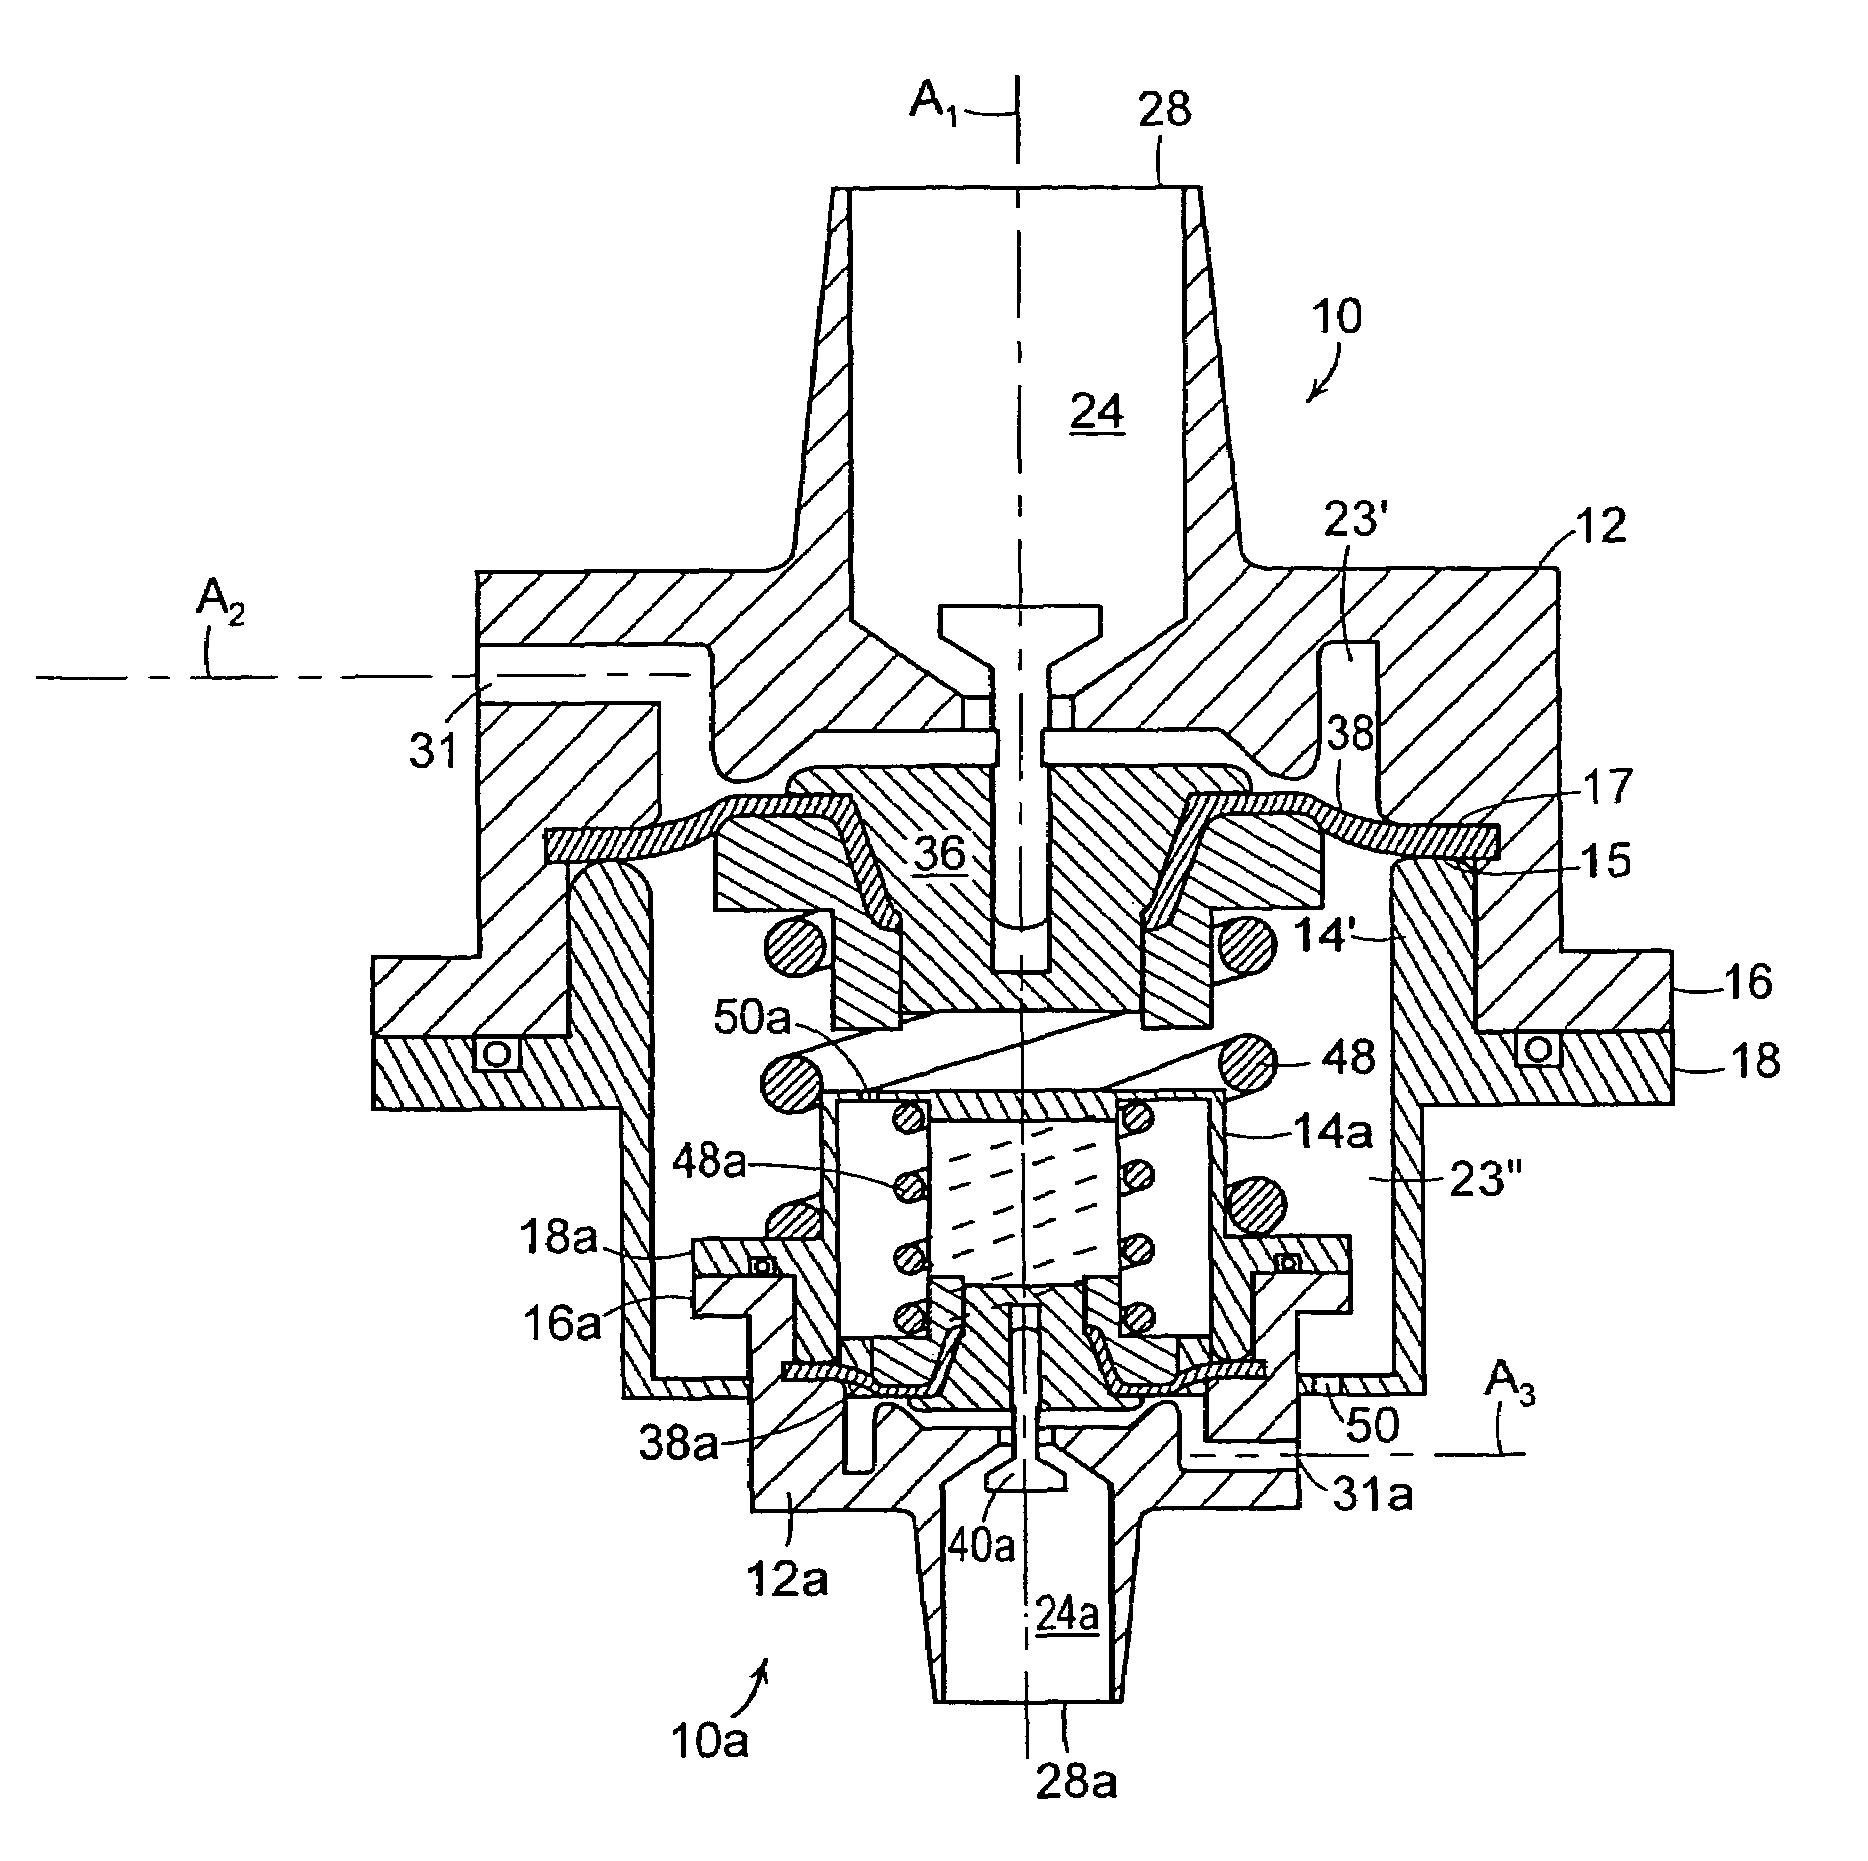 Constant flow valve assembly